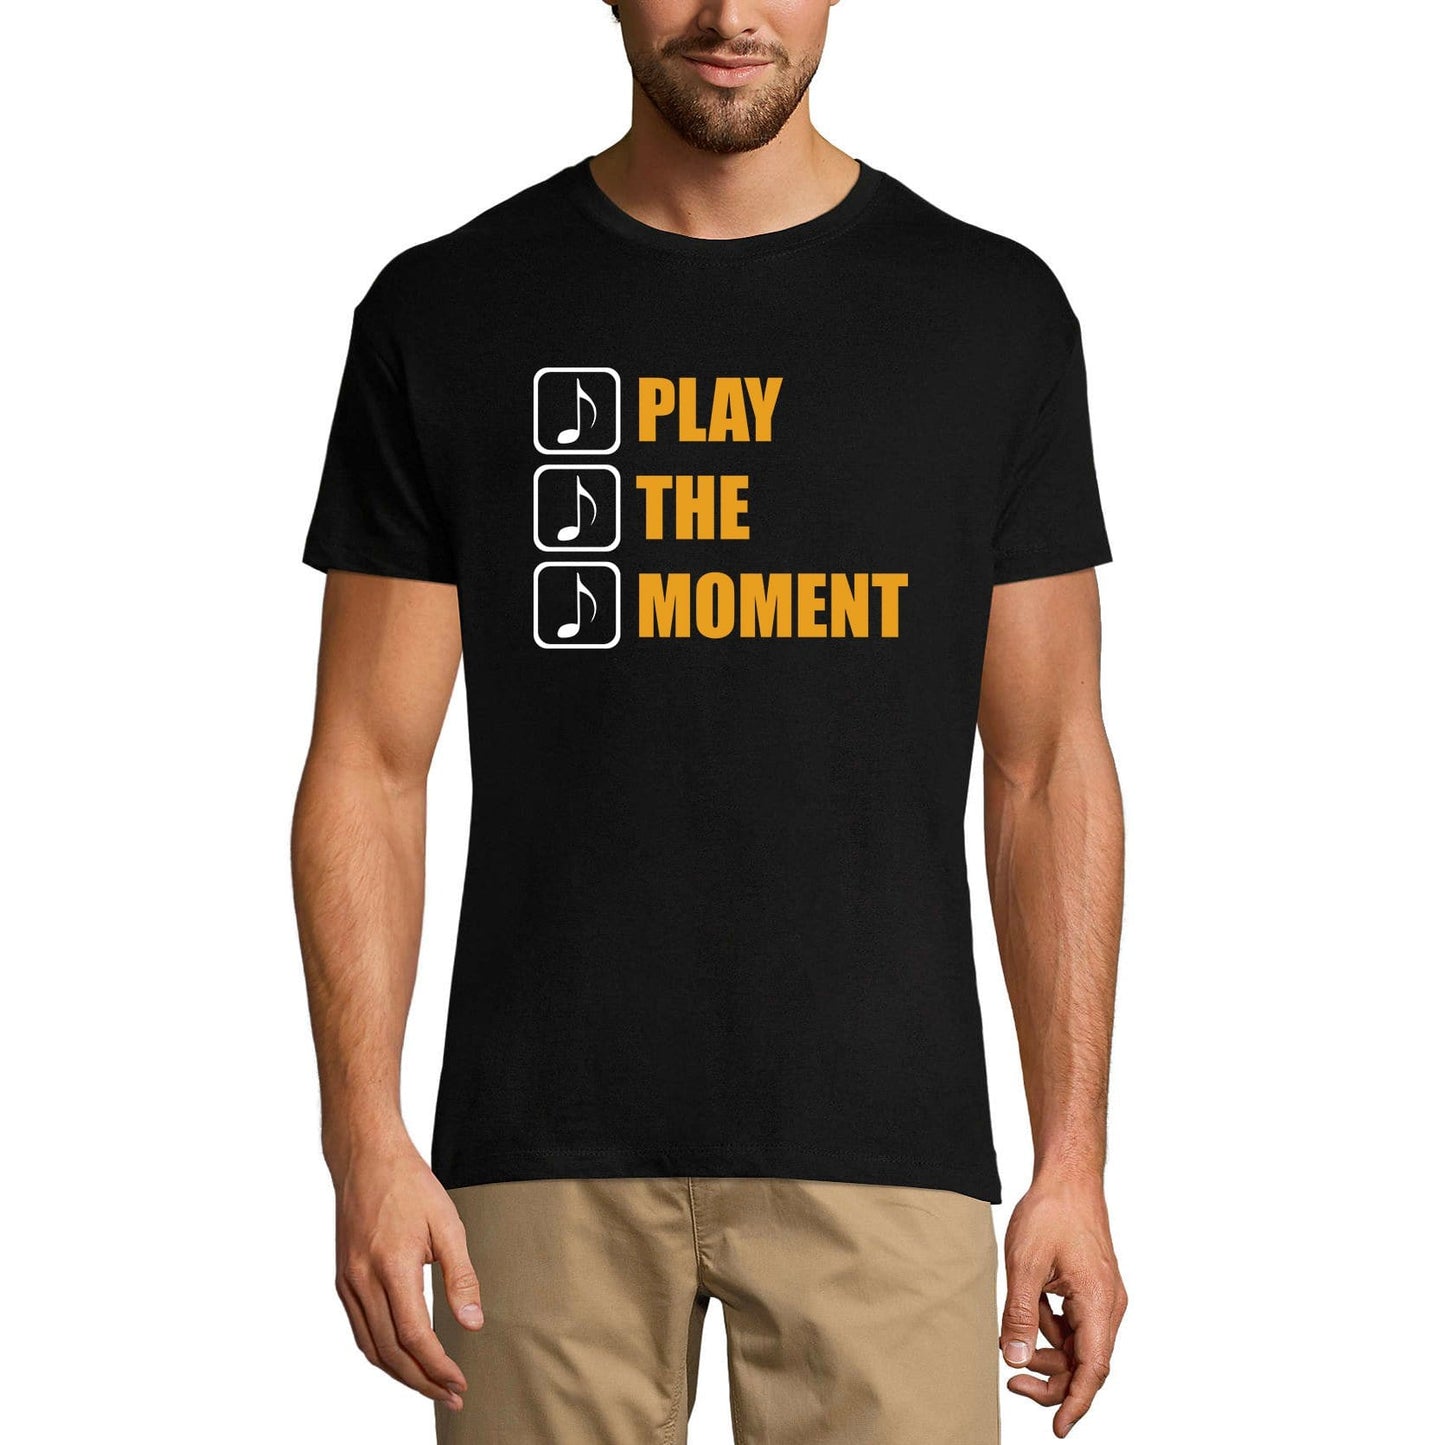 ULTRABASIC Men's Music T-Shirt Play the Moment - Sound Shirt for Musician